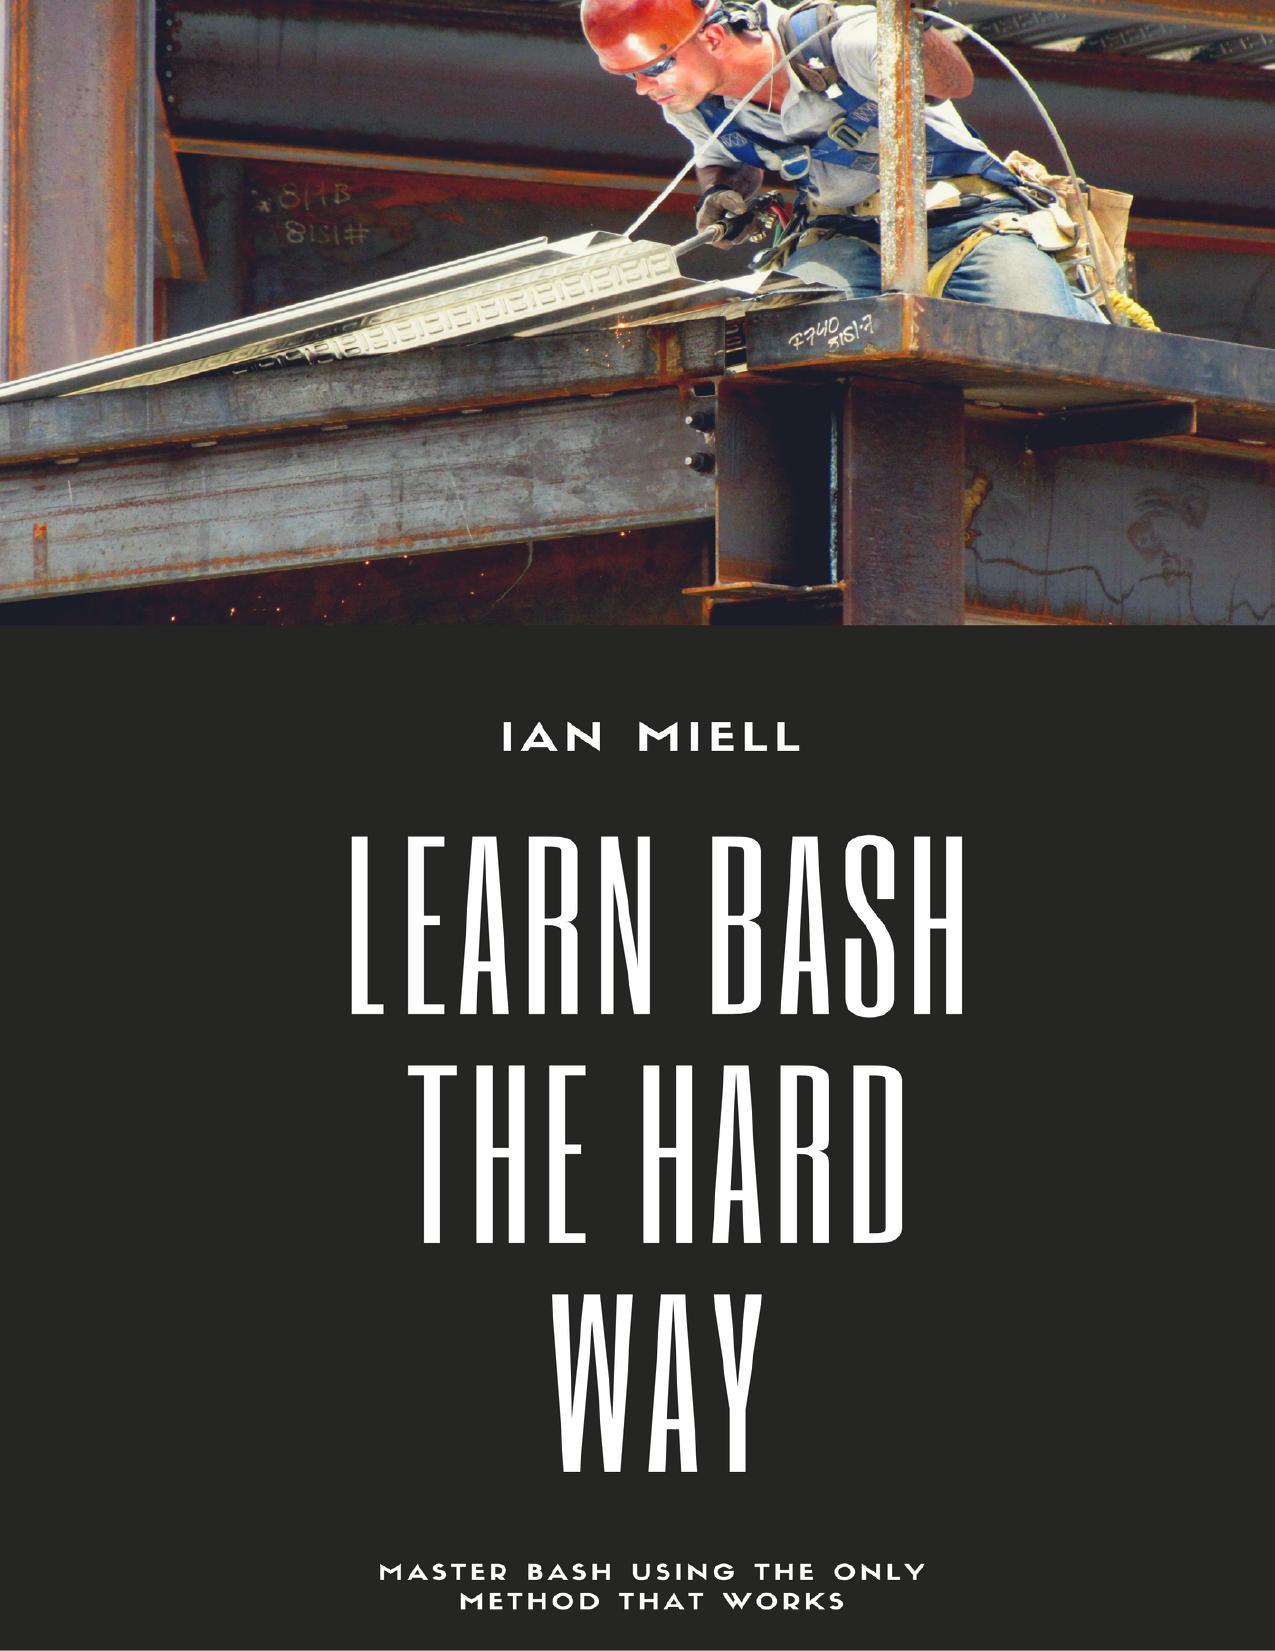 Learn Bash the Hard Way by Ian Miell